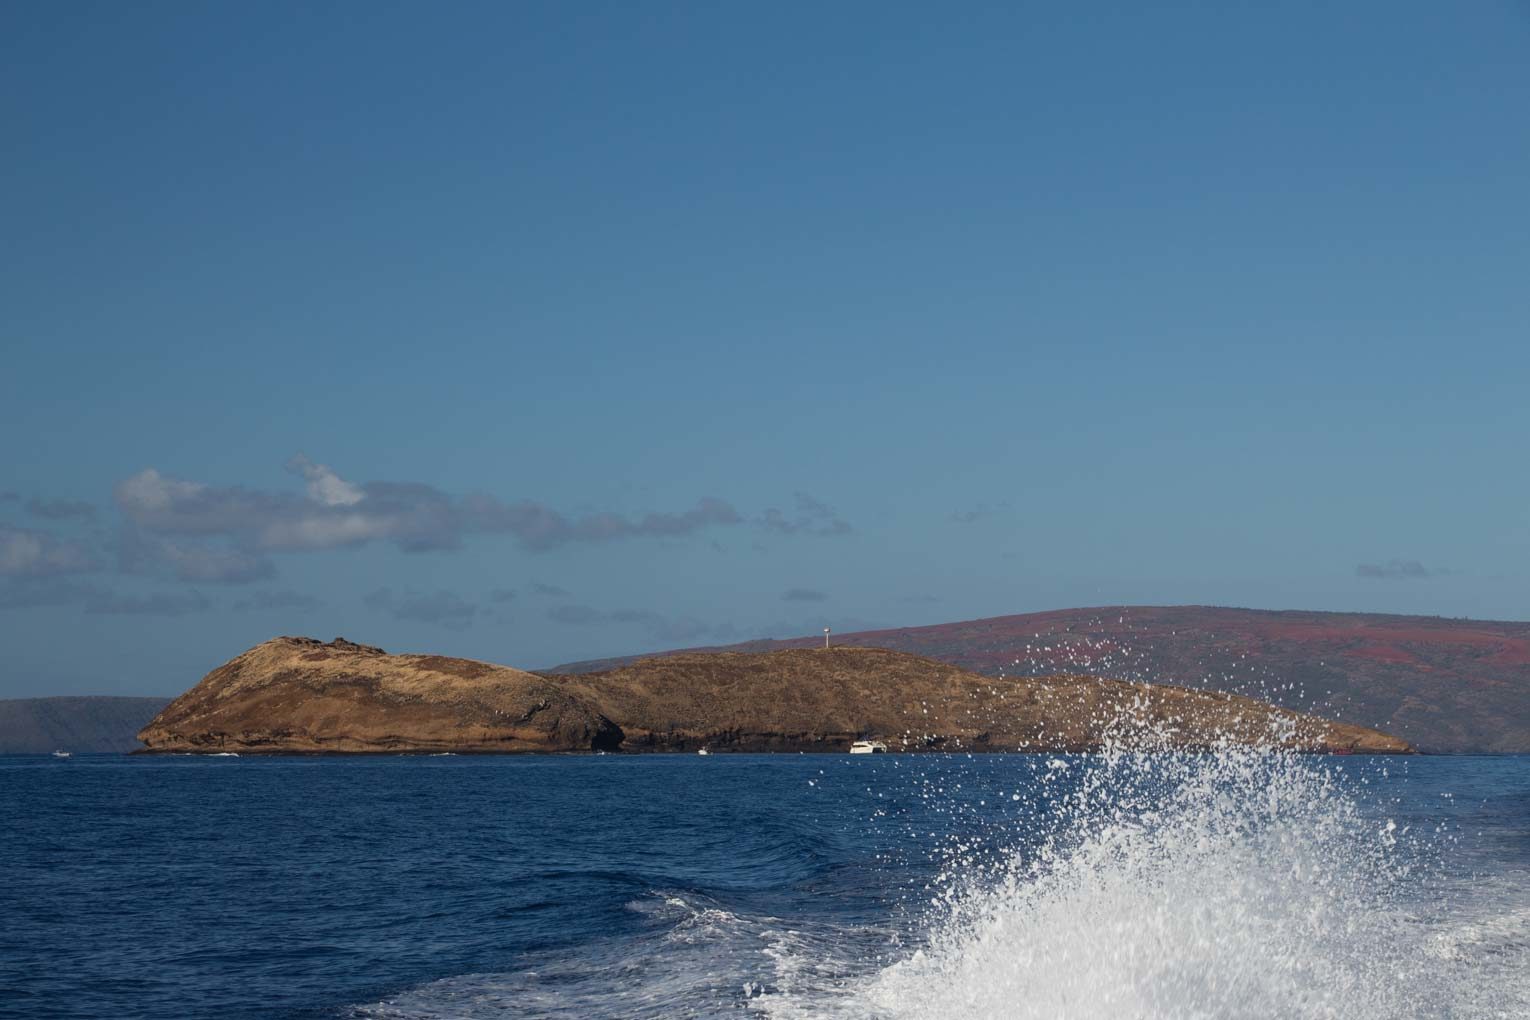 Maui Hawaii – Bootsfahrt zum Molokini Crater | SOMEWHERE ELSE